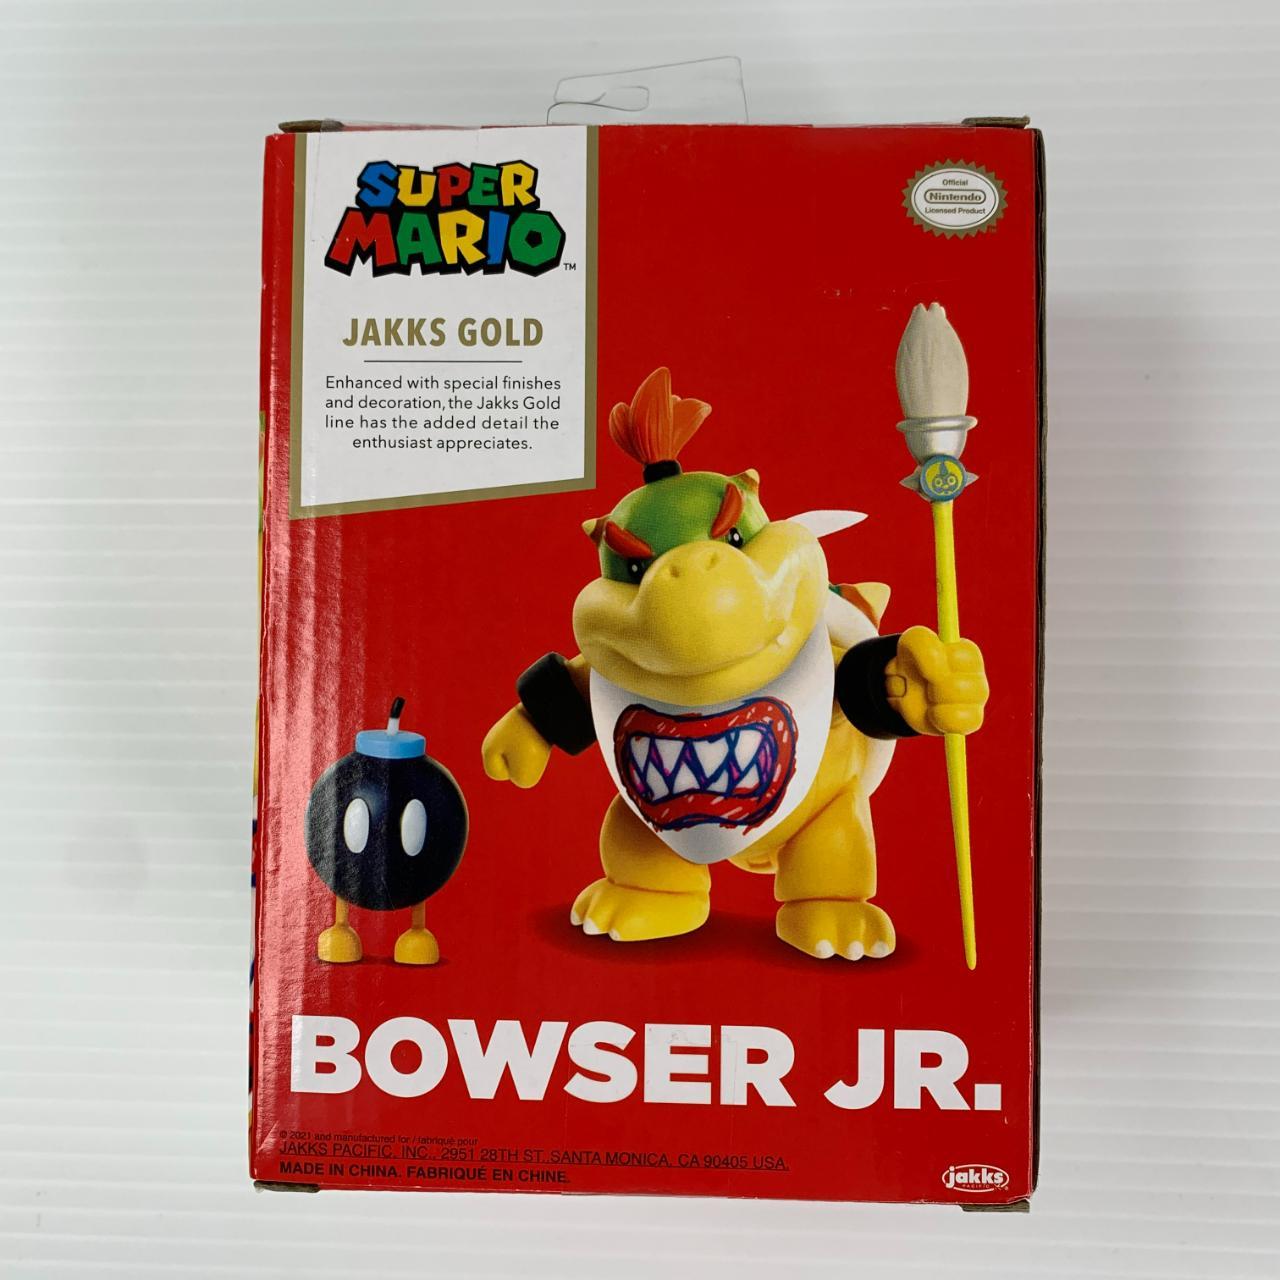 Super Mario Bowser Jr. Jakks Gold Nintendo... - Depop